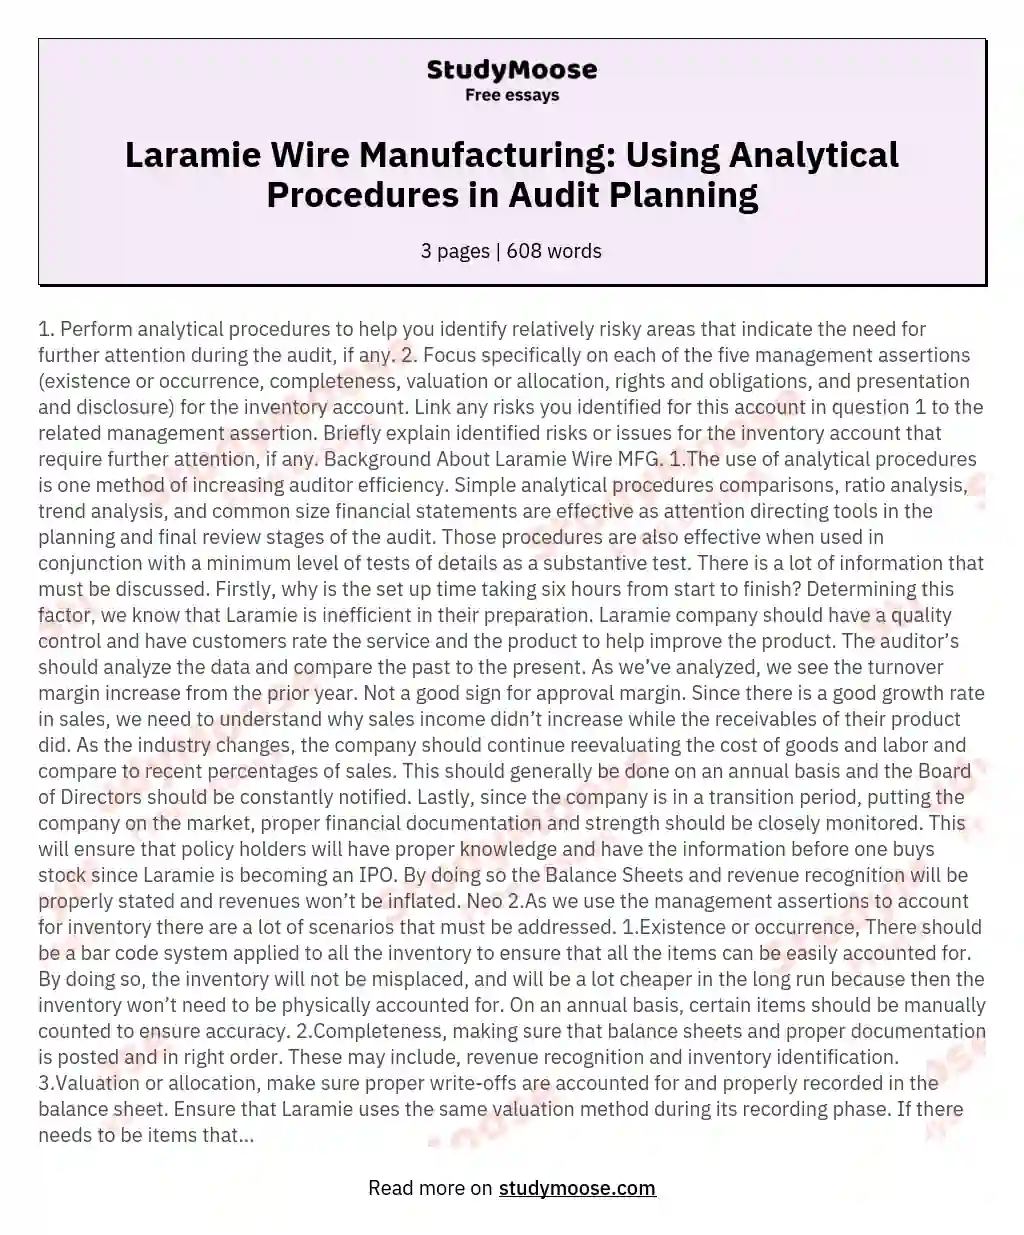 Laramie Wire Manufacturing: Using Analytical Procedures in Audit Planning essay